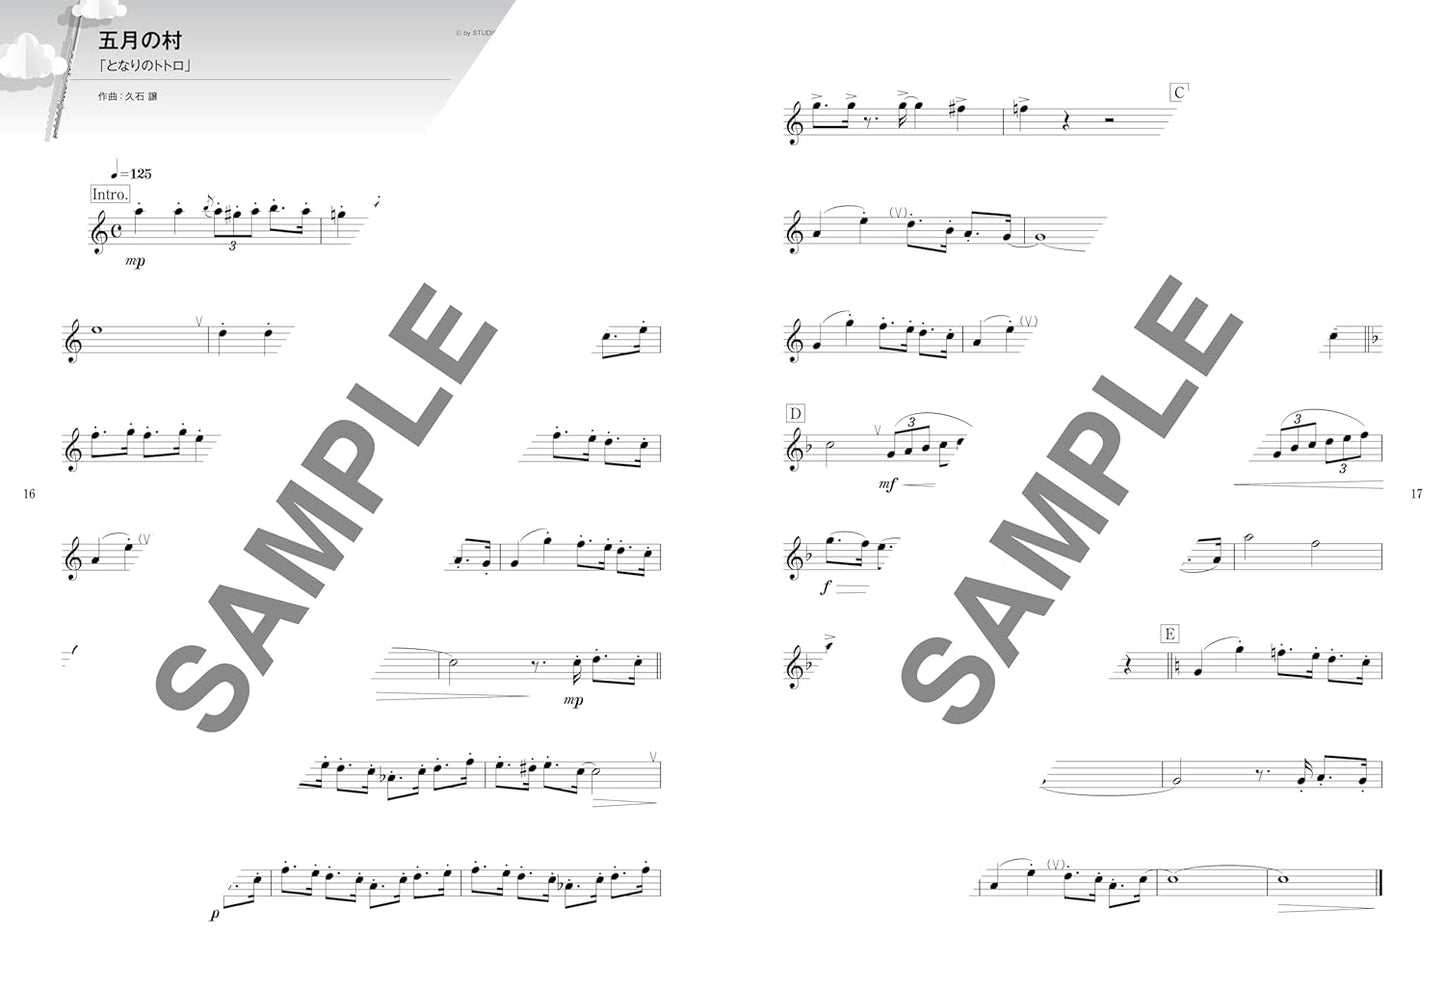 Studio Ghibli Collection for Flute Solo(Upper-Intermediate) Sheet Music Book